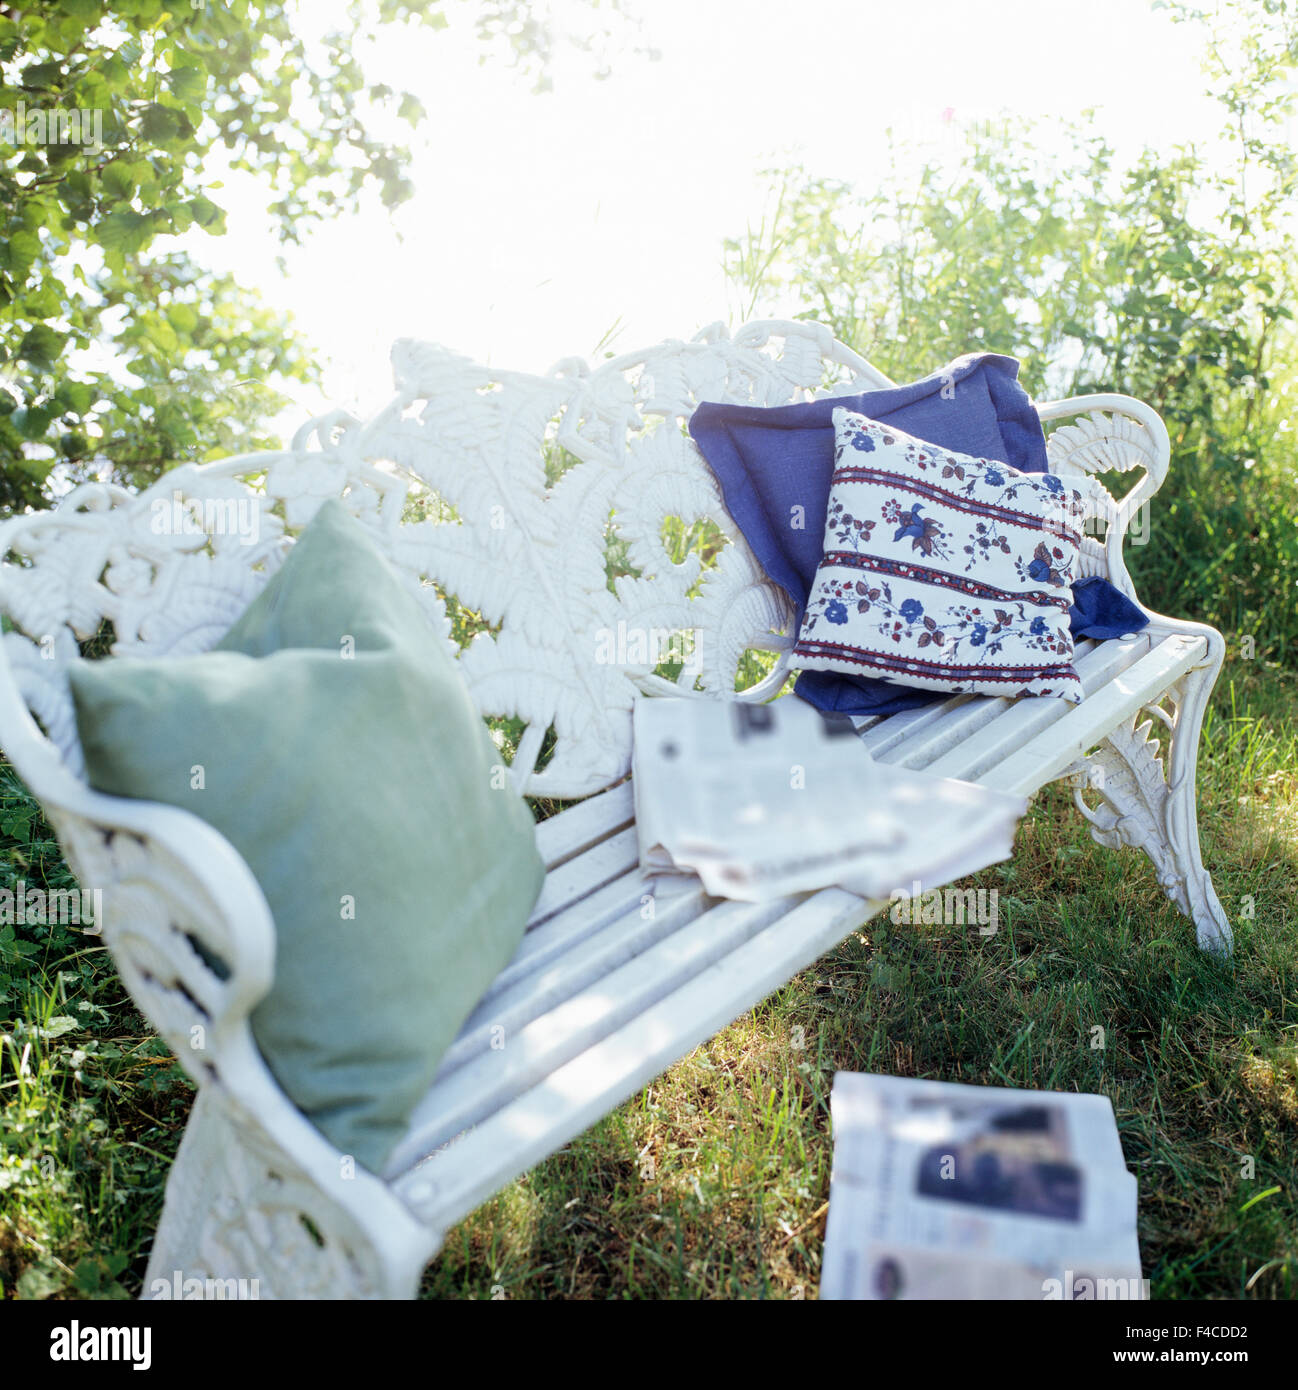 Cuscini e quotidiani su una panchina da giardino. Foto Stock